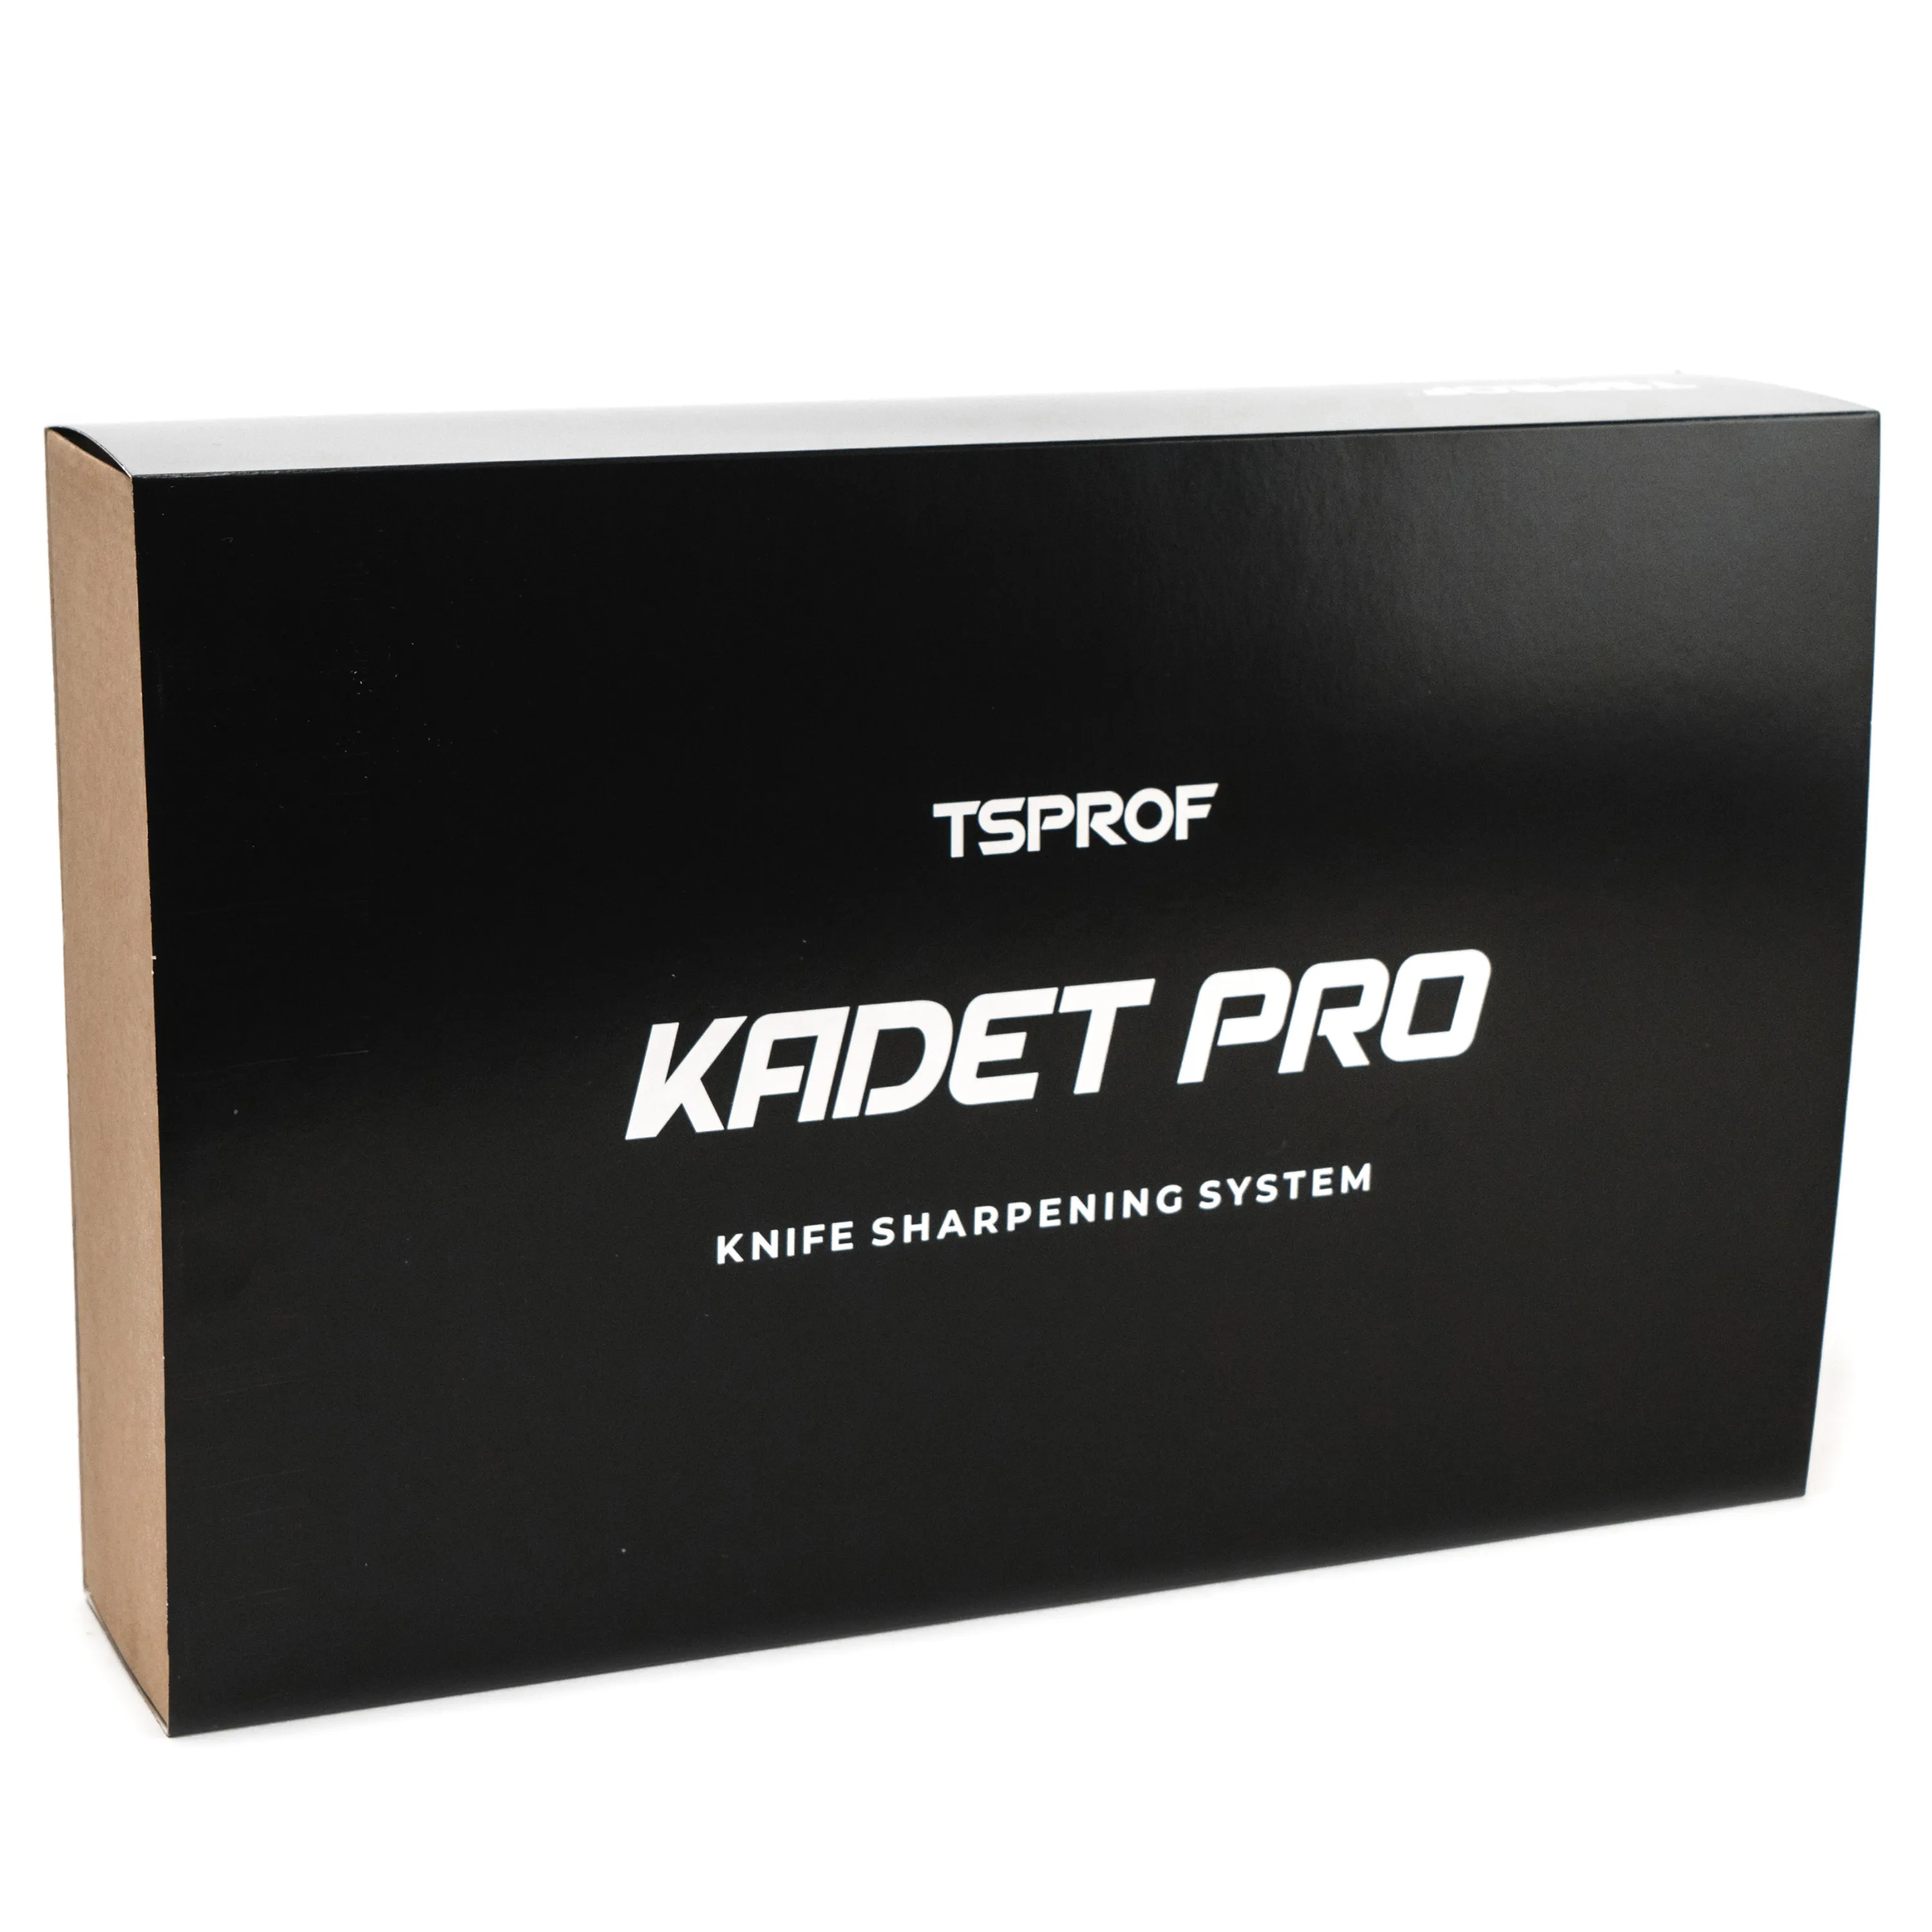 фото Набор для заточки TSPROF Kadet Pro, Версия T (без покрытия) на ytprof.ru